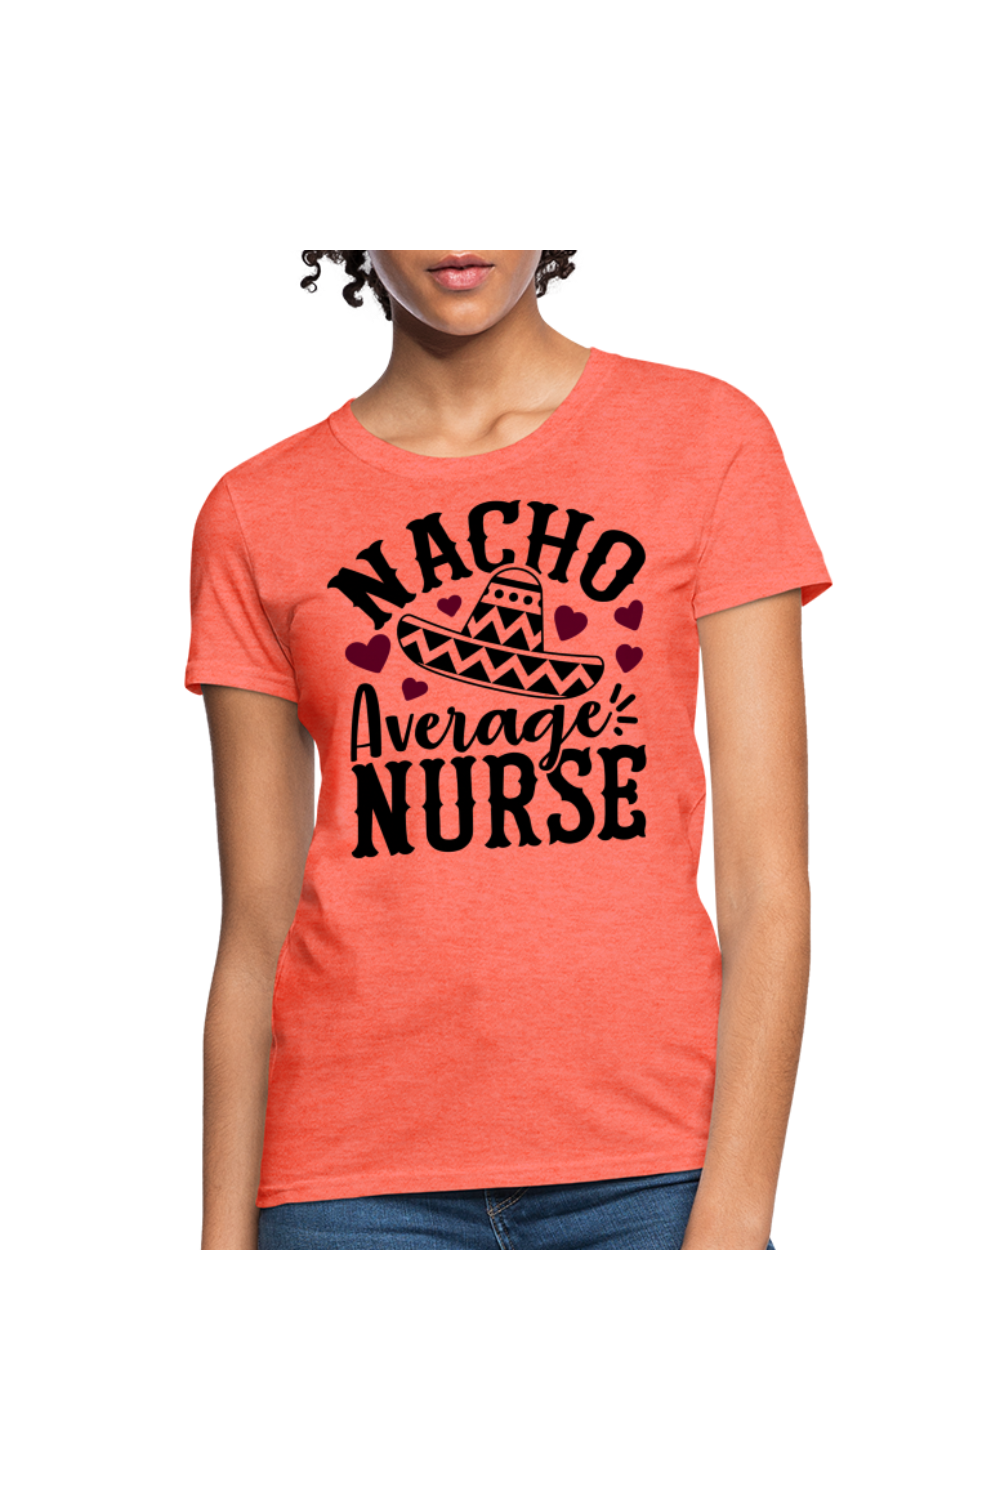 Nacho Average Nurse Women's Nurse T-Shirt - heather coral